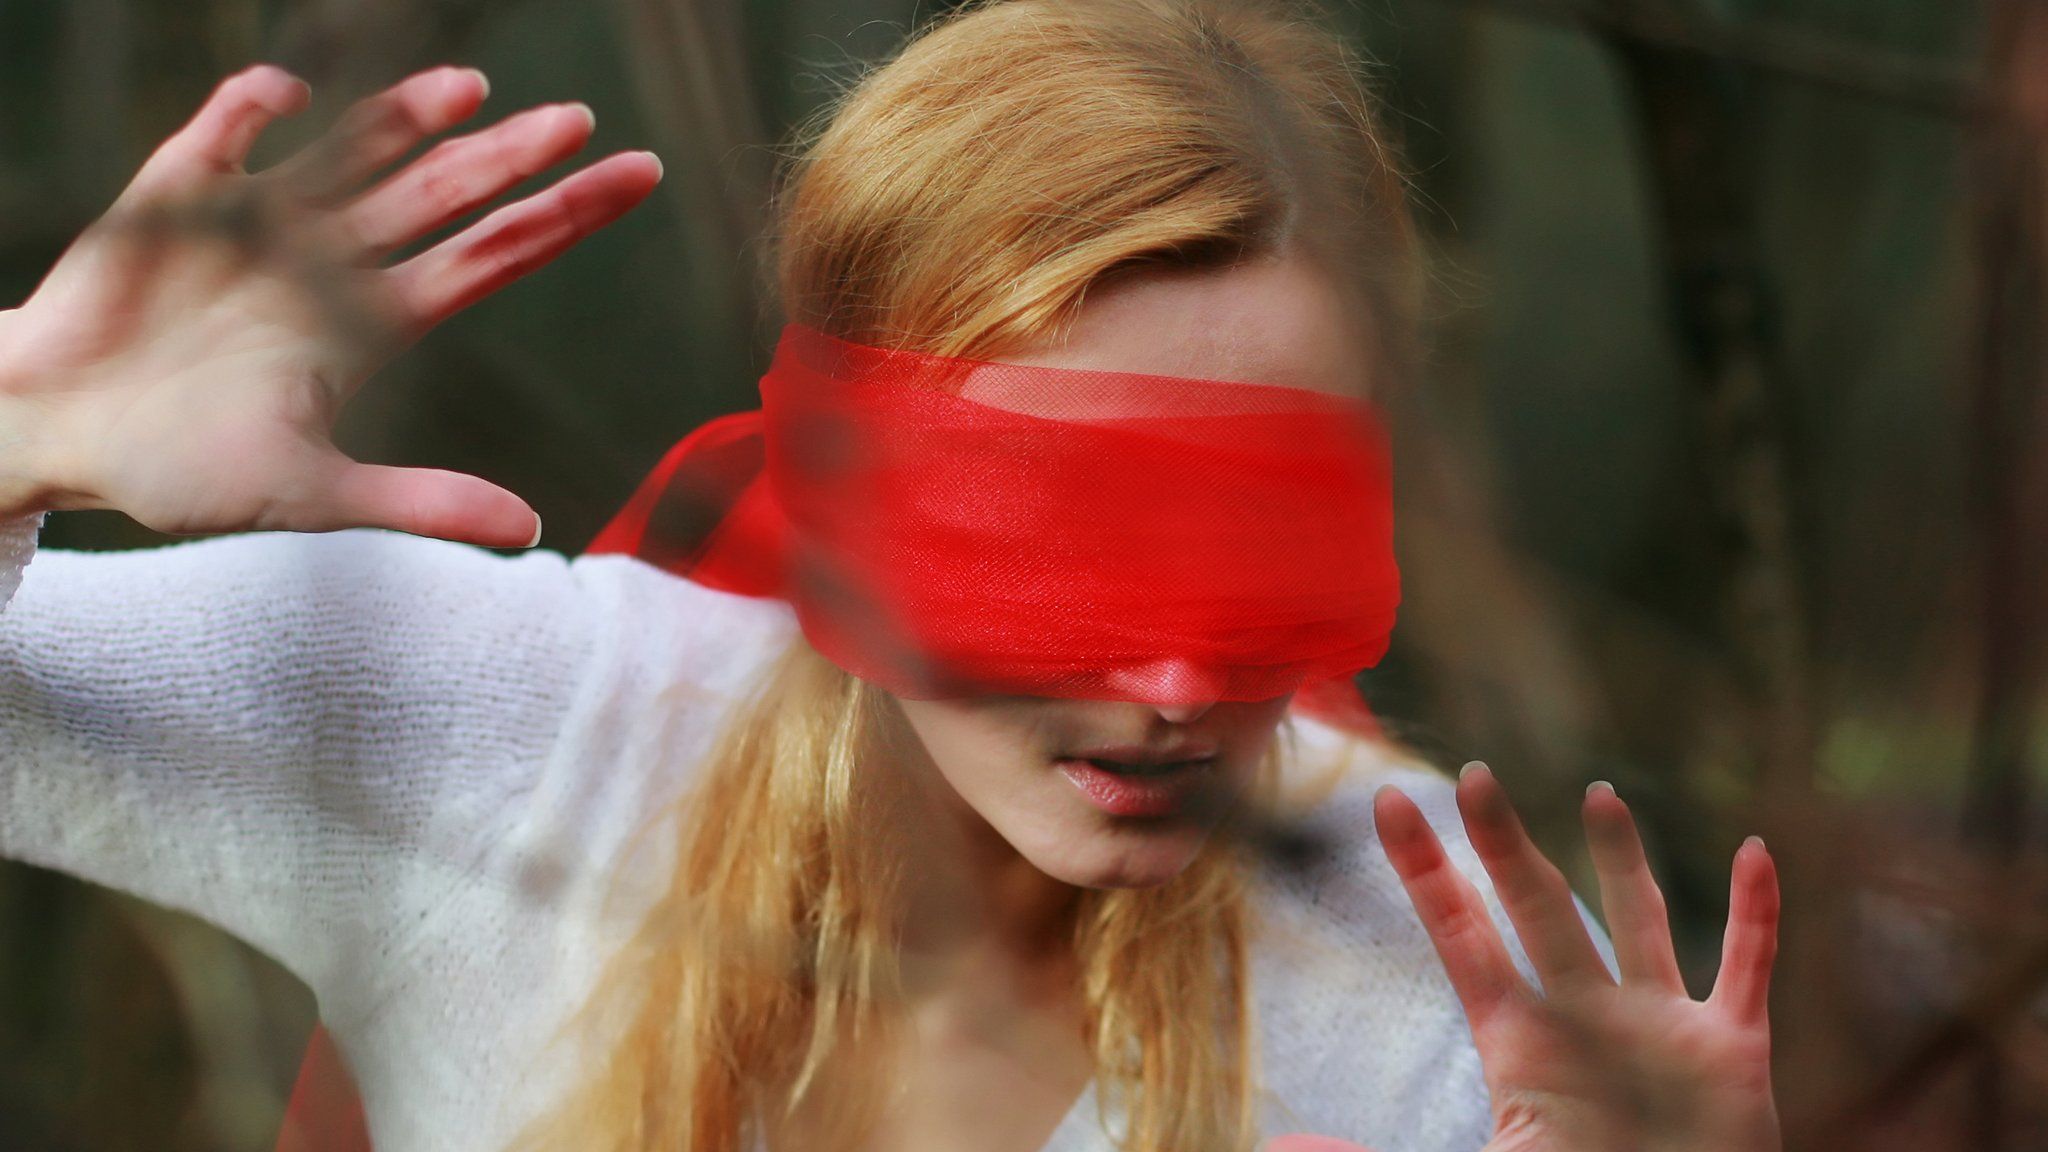 File image of blindfolded woman